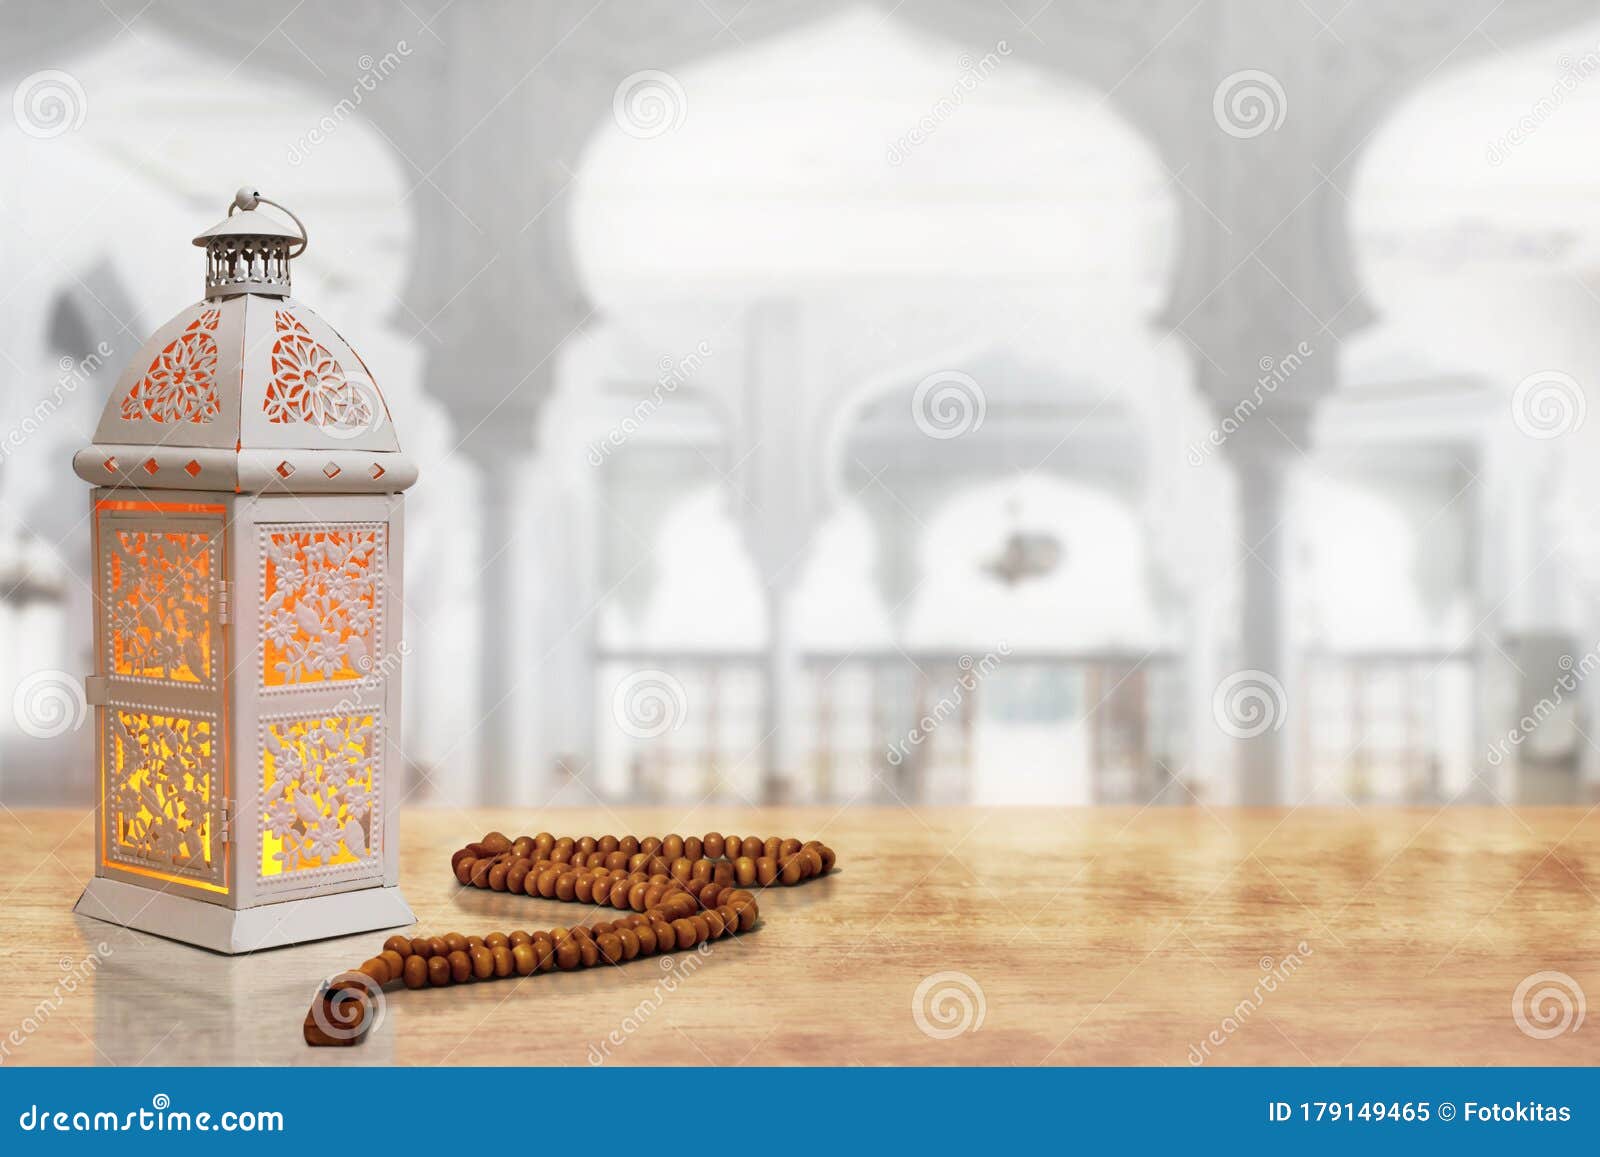 arabic lantern, ramadan kareem backgrounds